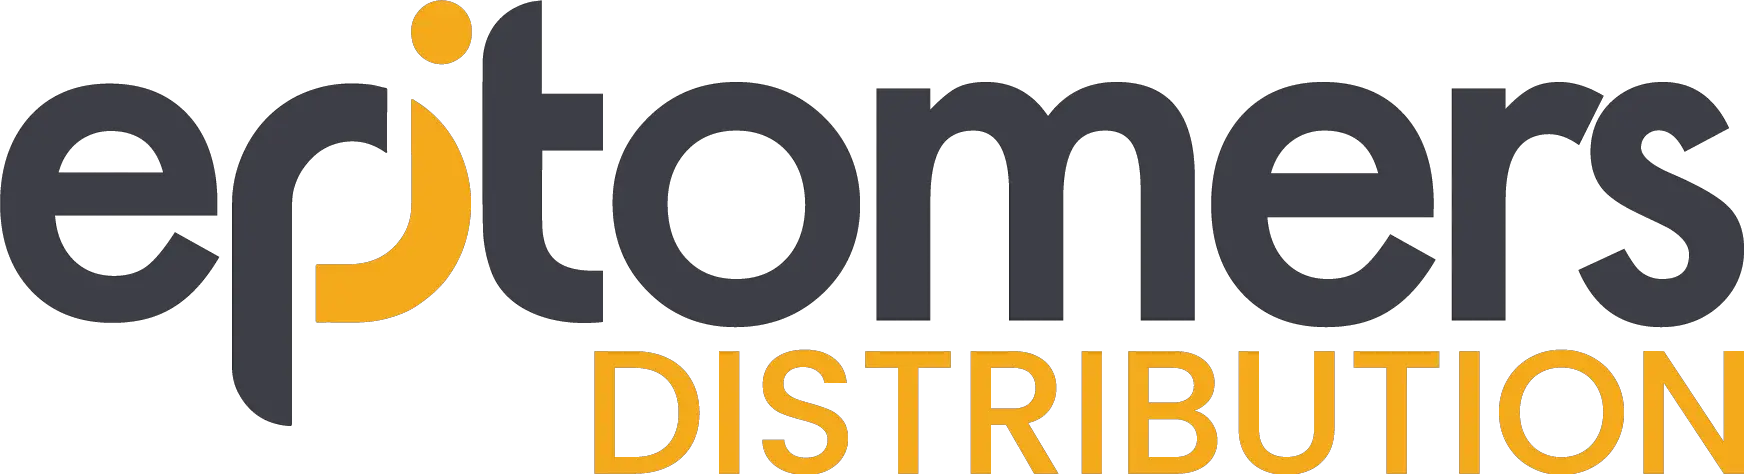 Business logo of EpitomersDistribution